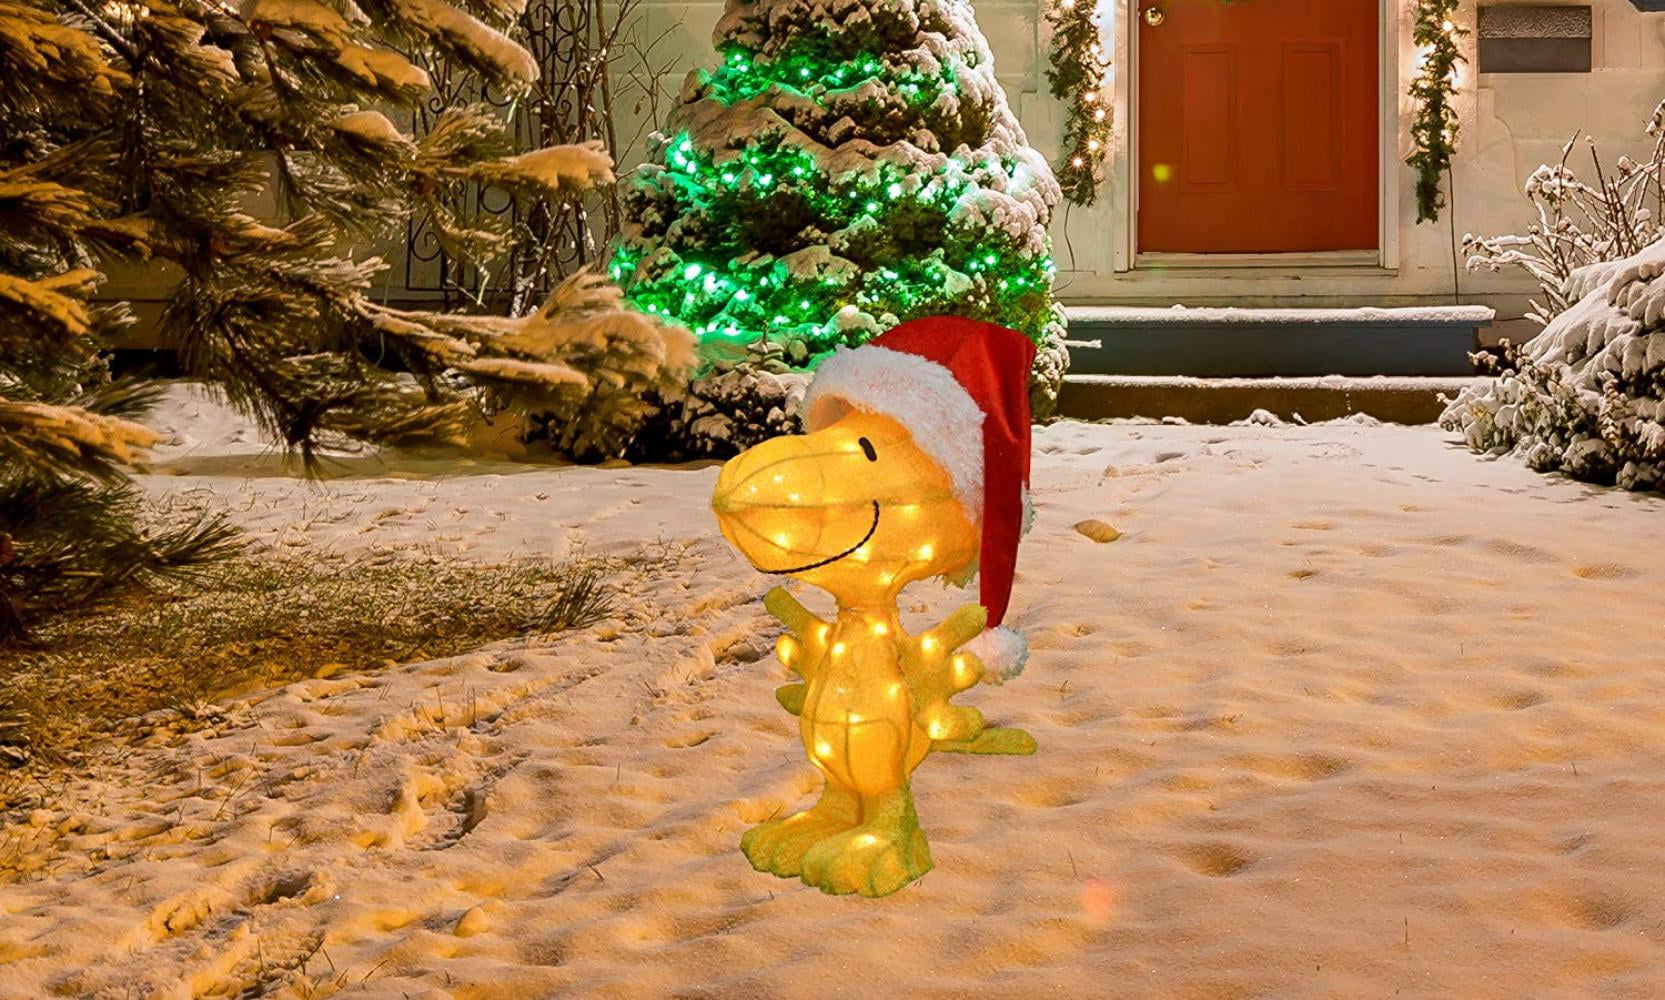 35 Lights ProductWorks 22-Inch Peanuts 3D LED Pre-Lit Woodstock in Santa Hat Christmas Yard Art